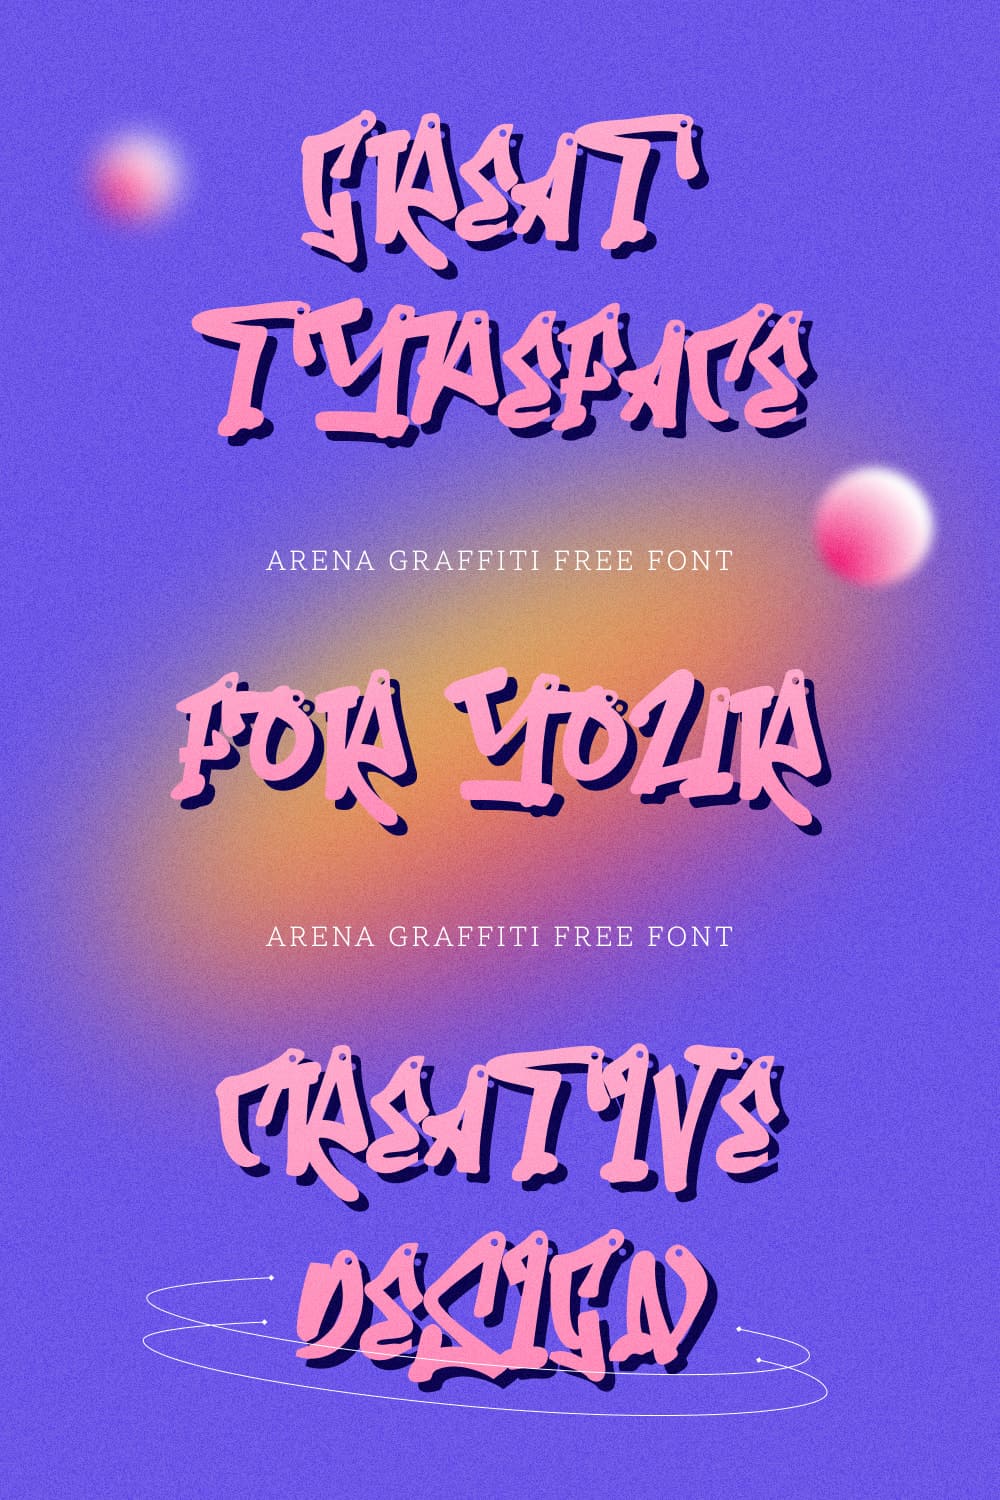 03 arena graffiti free font pinterest